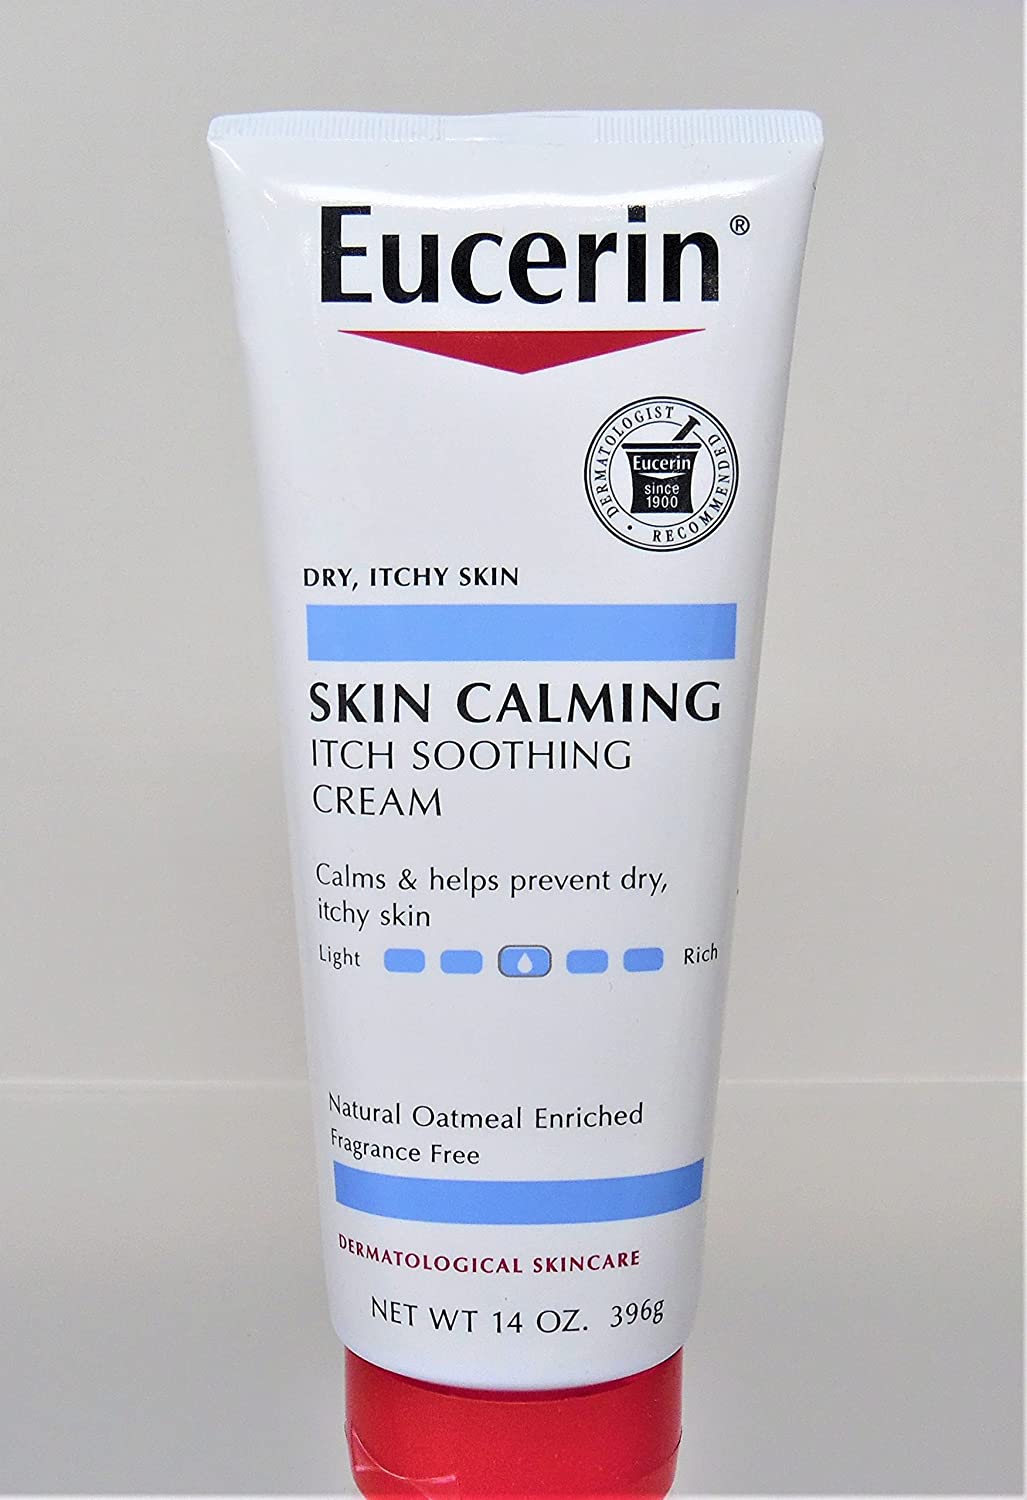 Eucerin Skin Calming Daily Moisturizing Crme – 14 oz – 2 pk by Eucerin